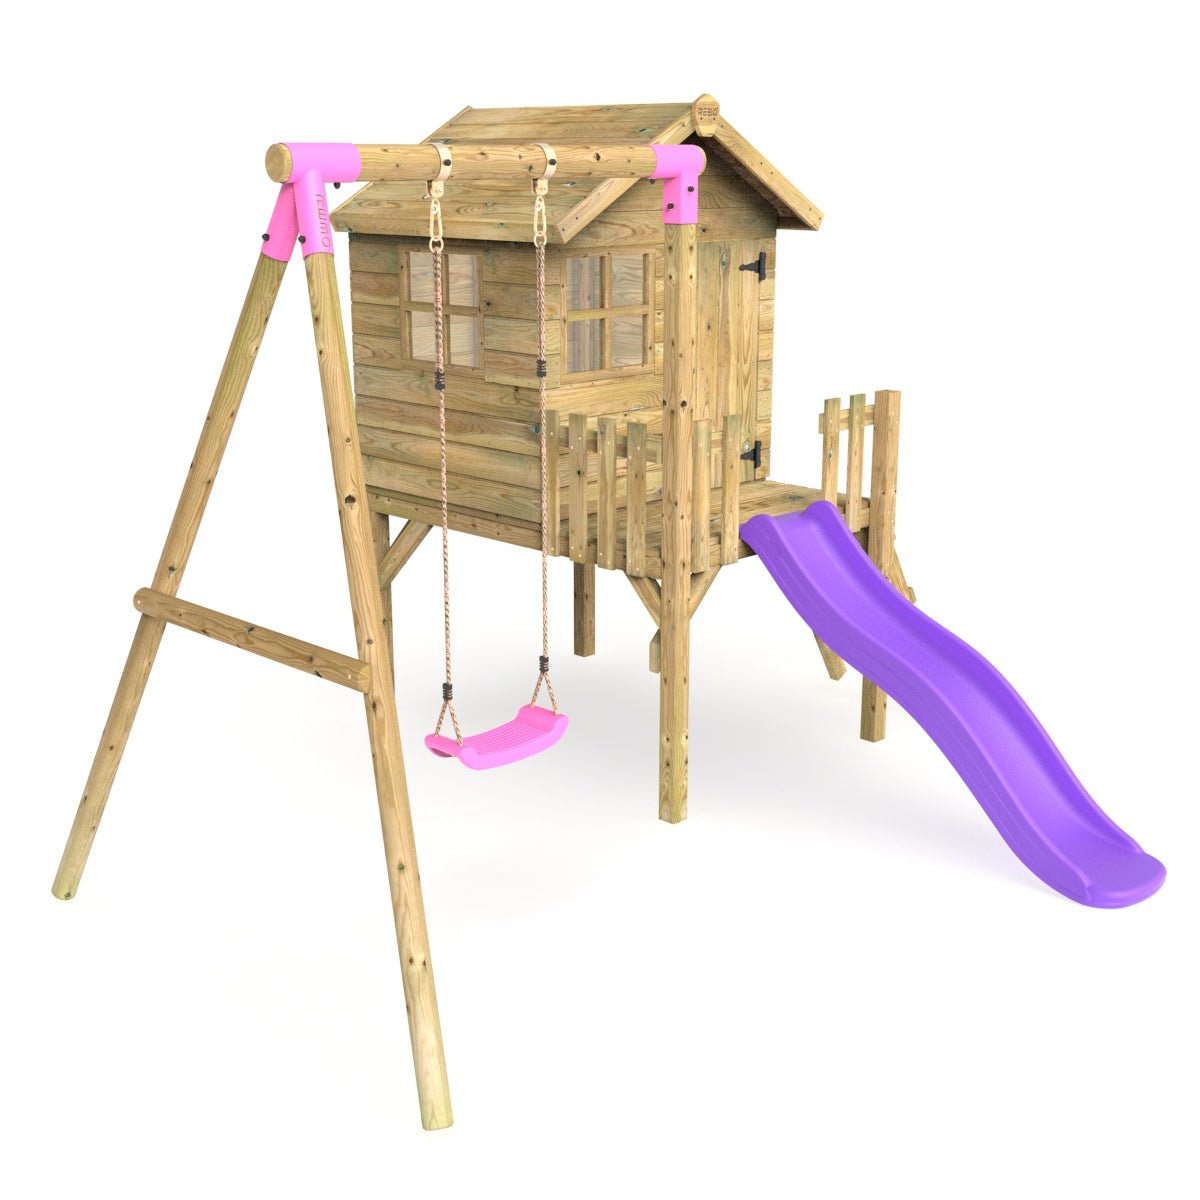 Rebo Orchard 4FT x 4FT Wooden Playhouse + Swings, 900mm Deck & 6FT Slide - Solar Purple